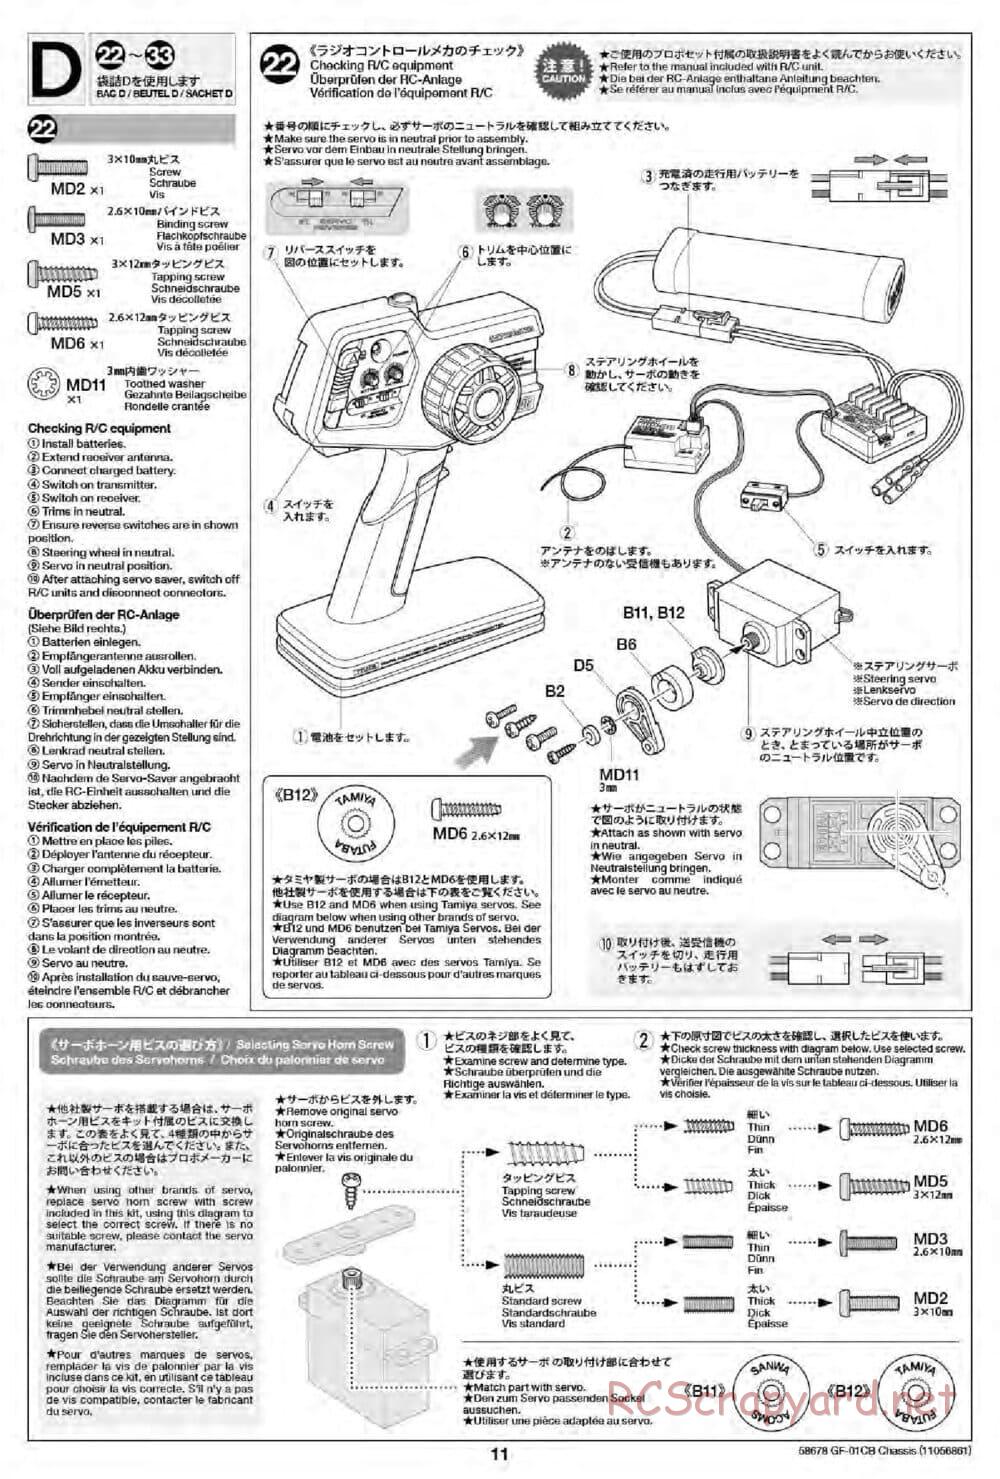 Tamiya - Comical Avante - GF-01CB Chassis - Manual - Page 13